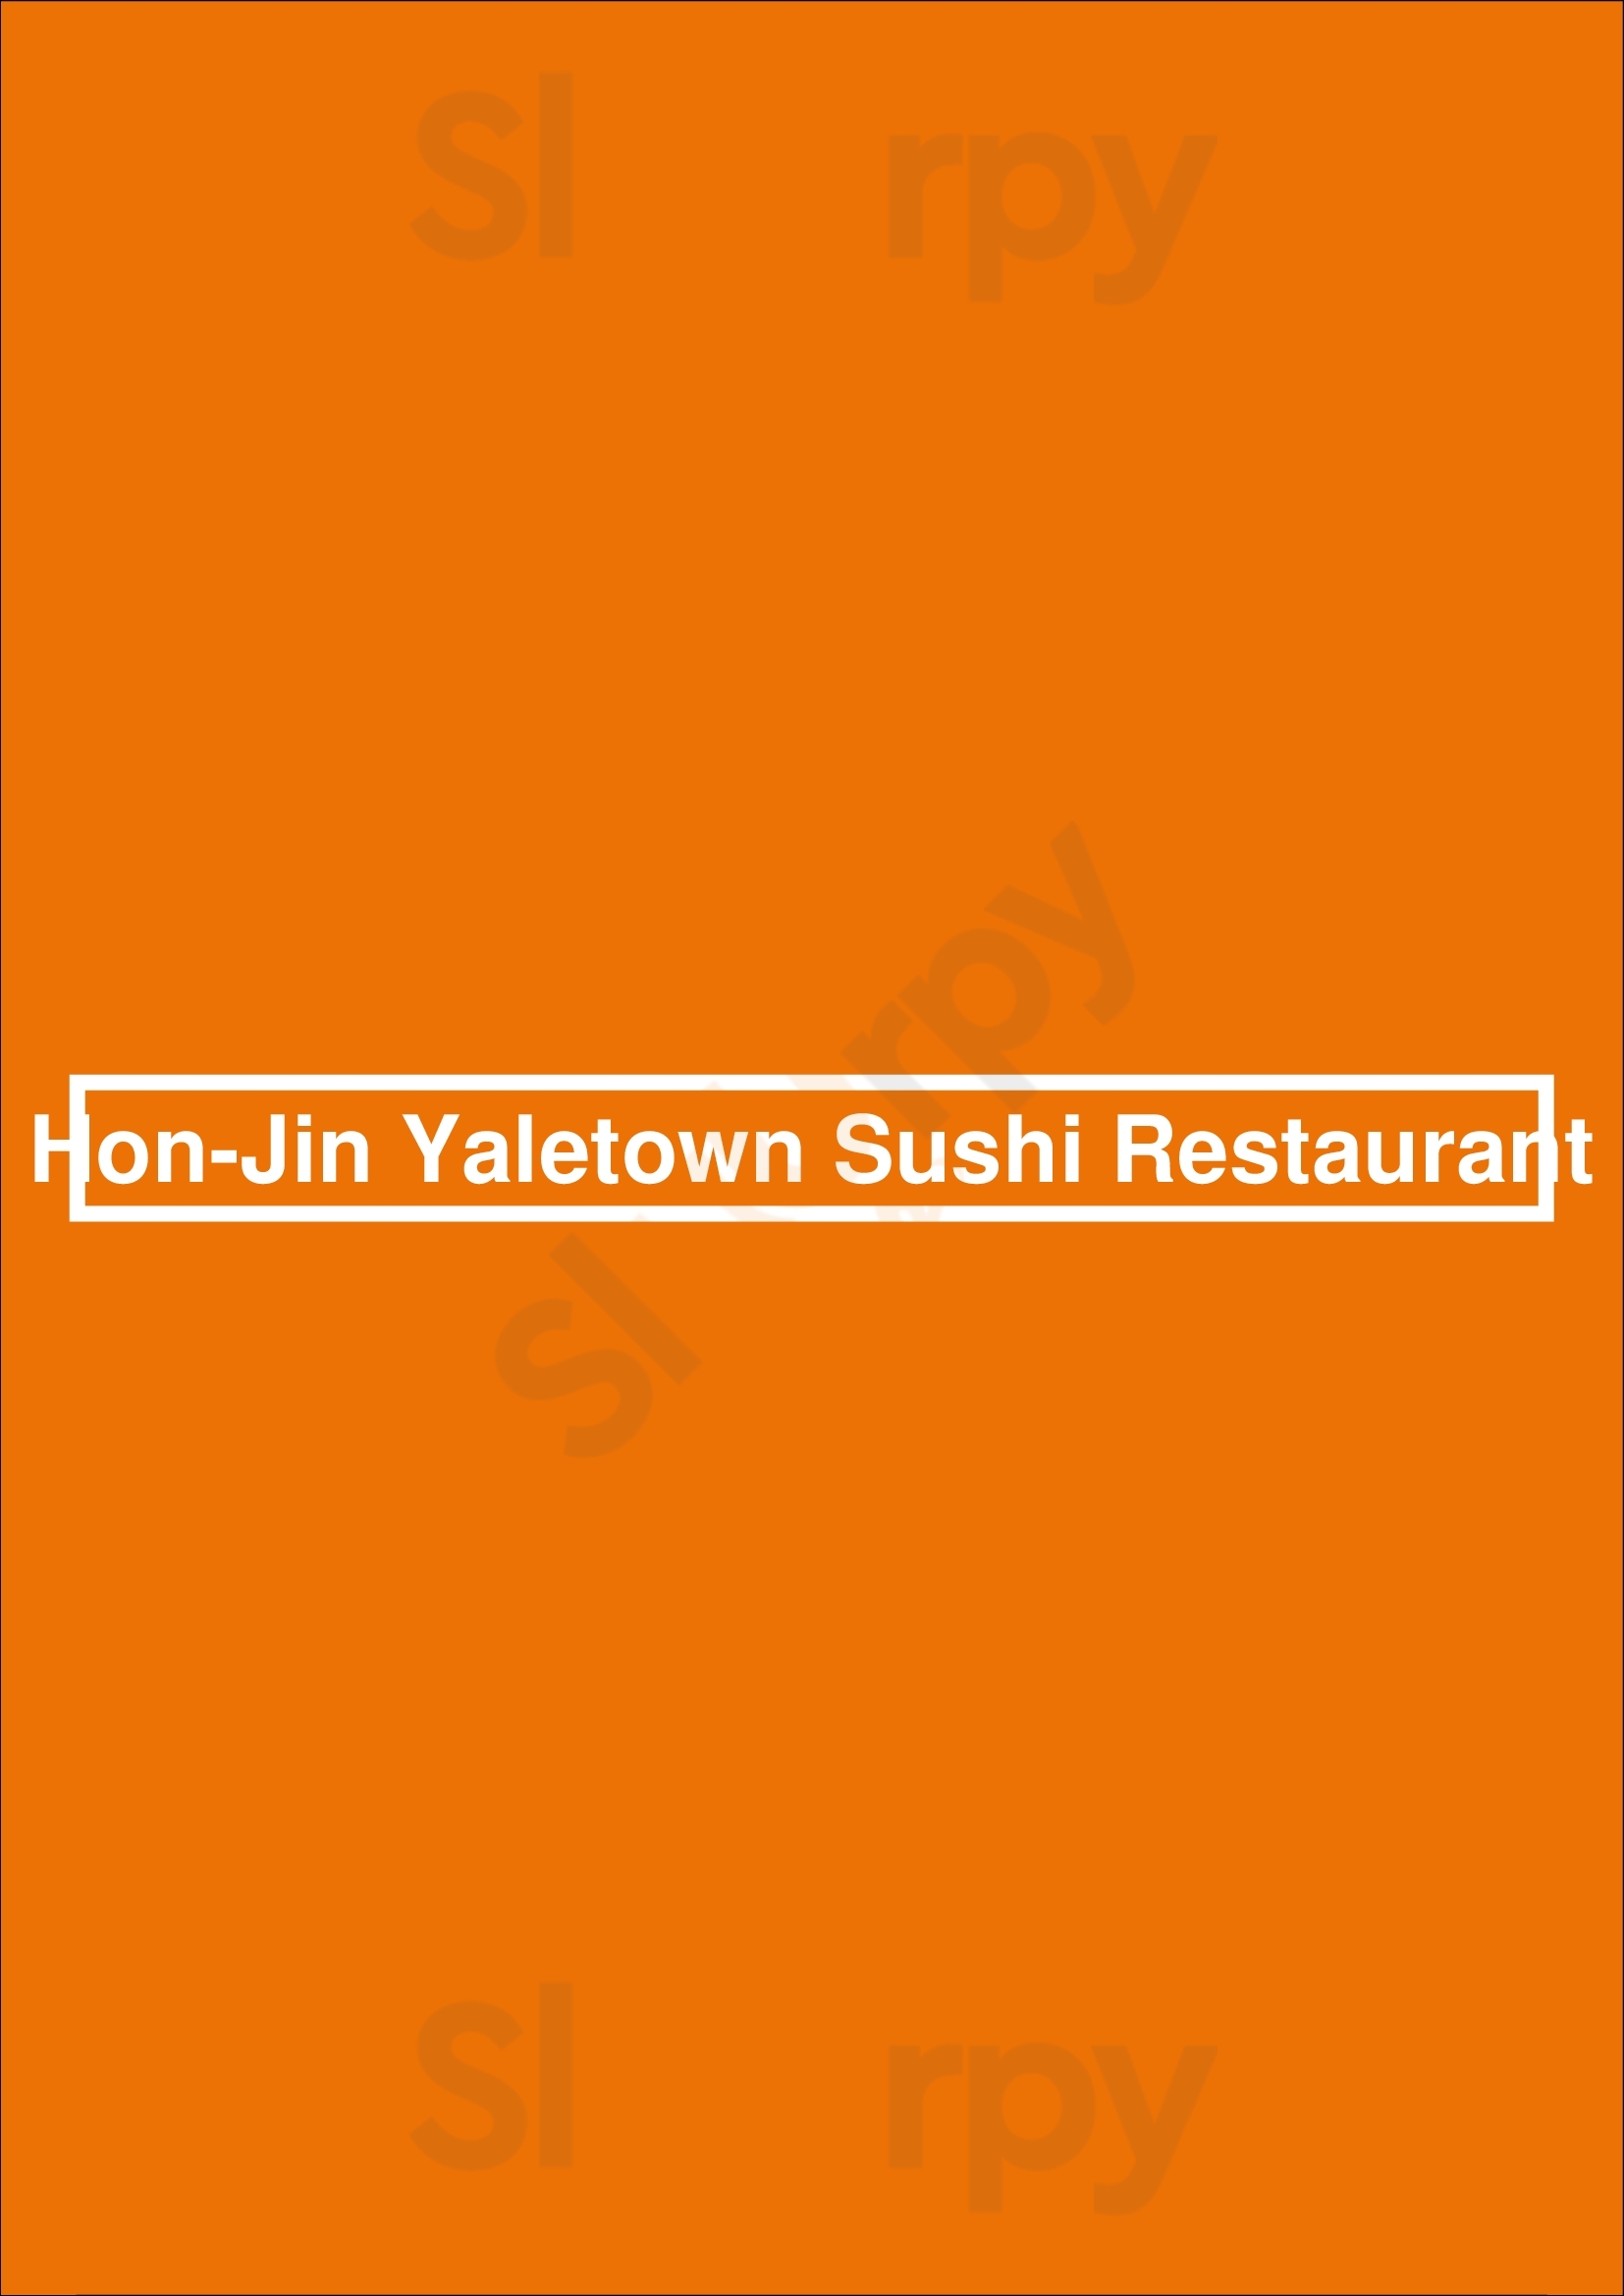 Hon-jin Yaletown Sushi Restaurant Vancouver Menu - 1